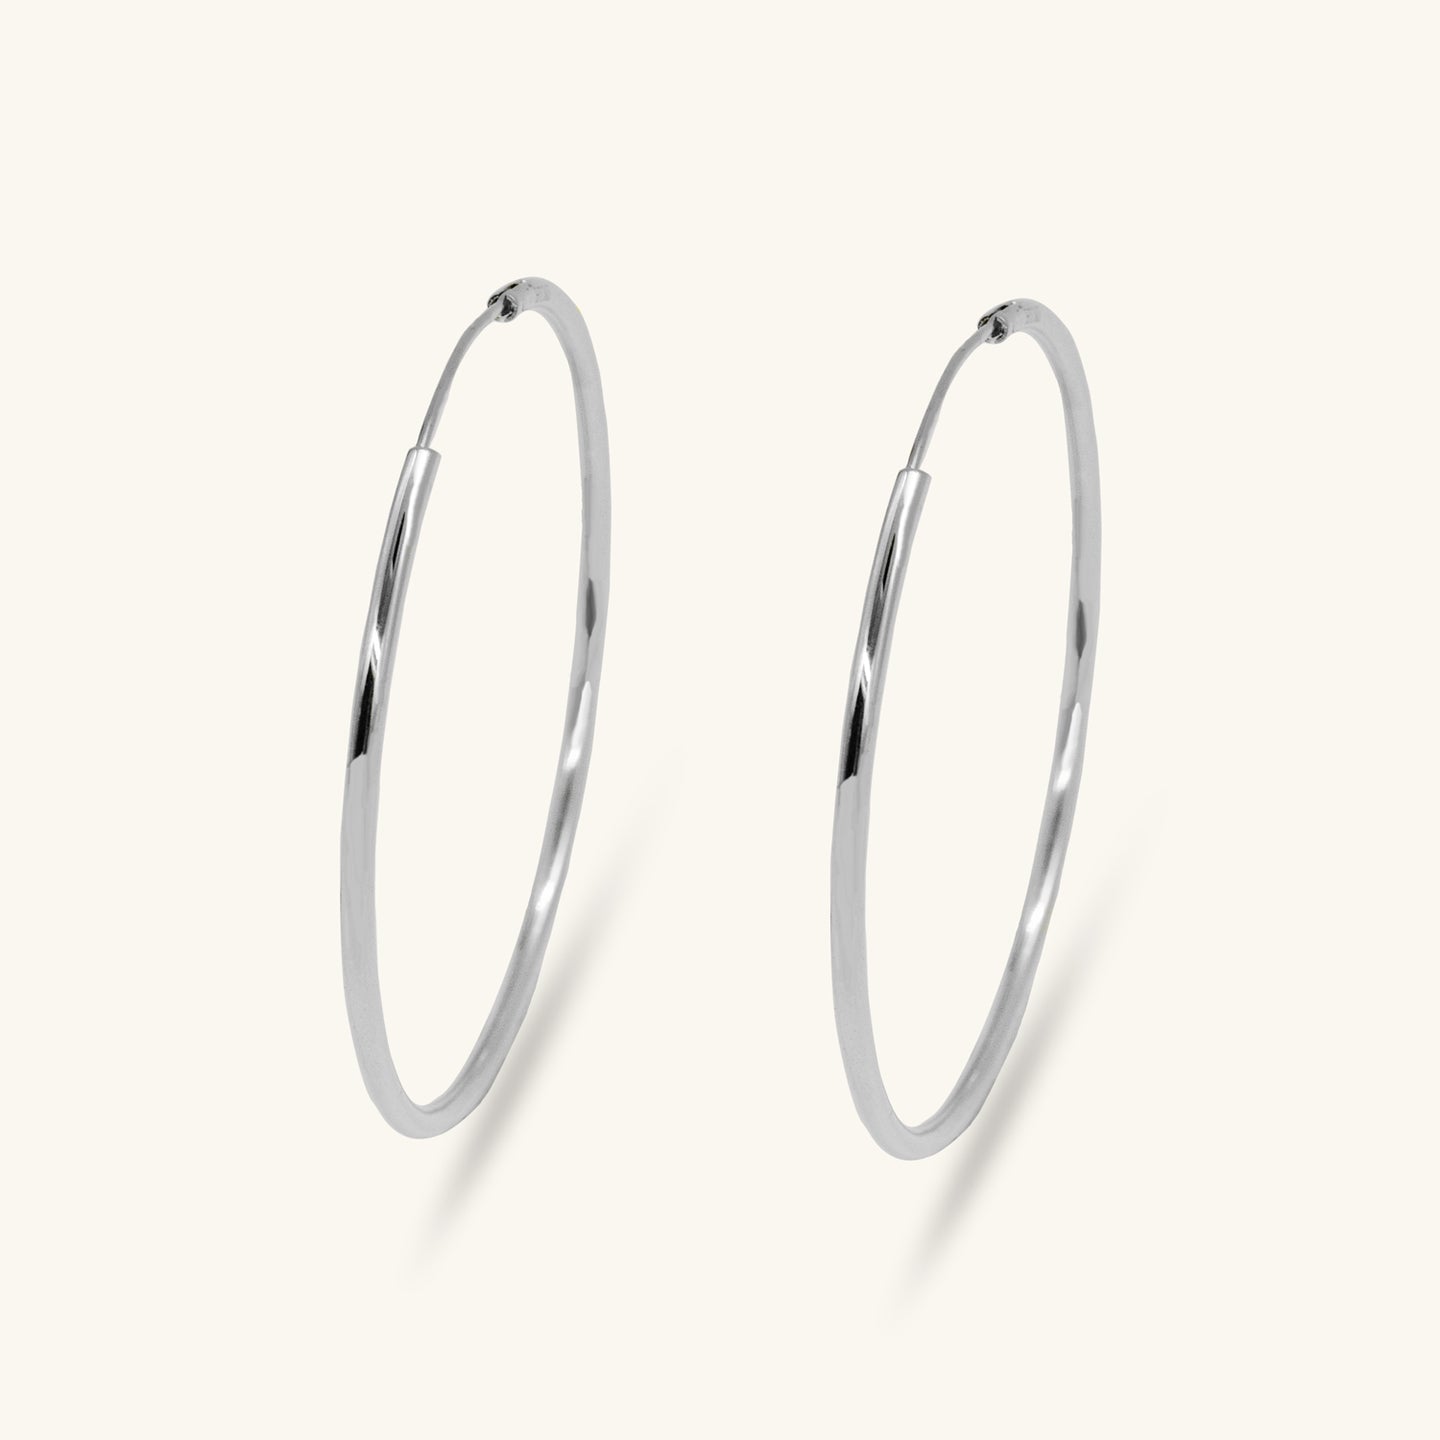 Stylish Large 50mm Hoop Earrings by HYMI - Elegant & Comfortable